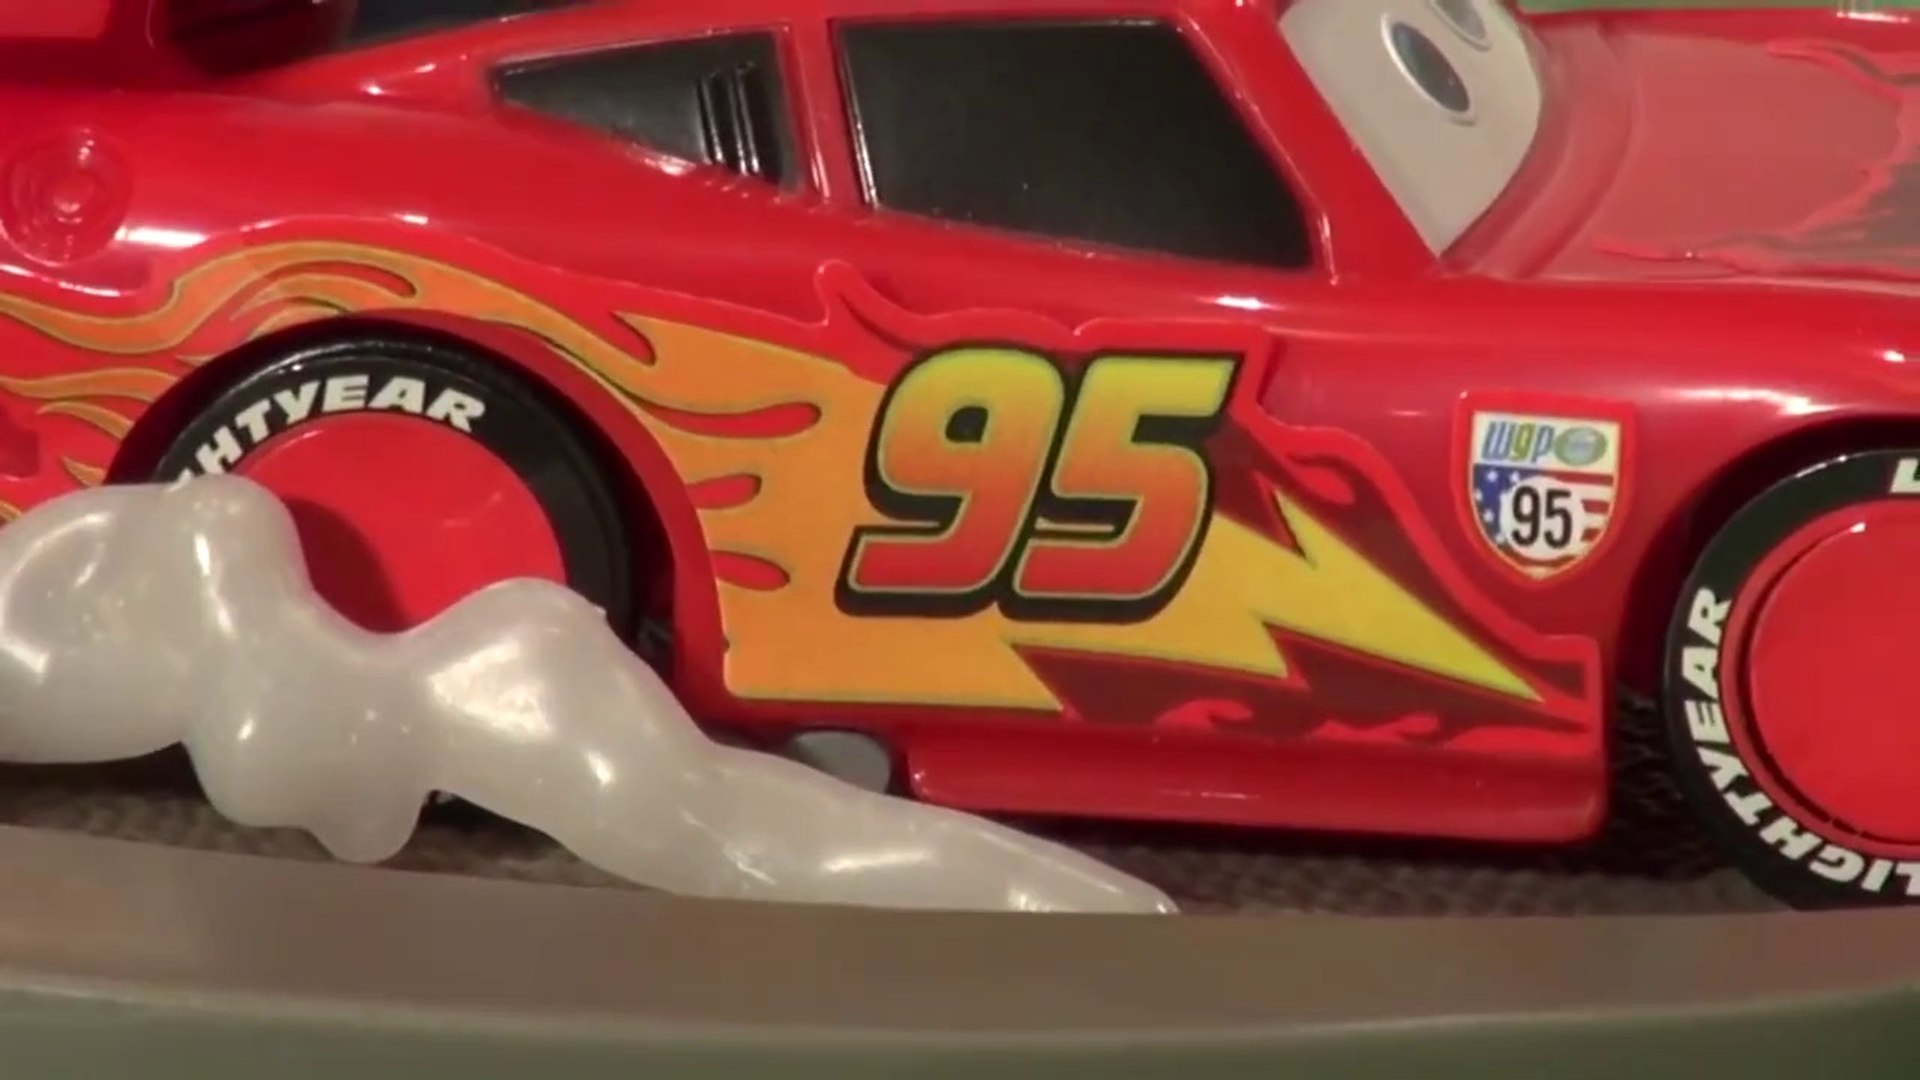 Pixar Cars2 Lightning McQueen Klip Kitz Toy Car Assembly - video Dailymotion